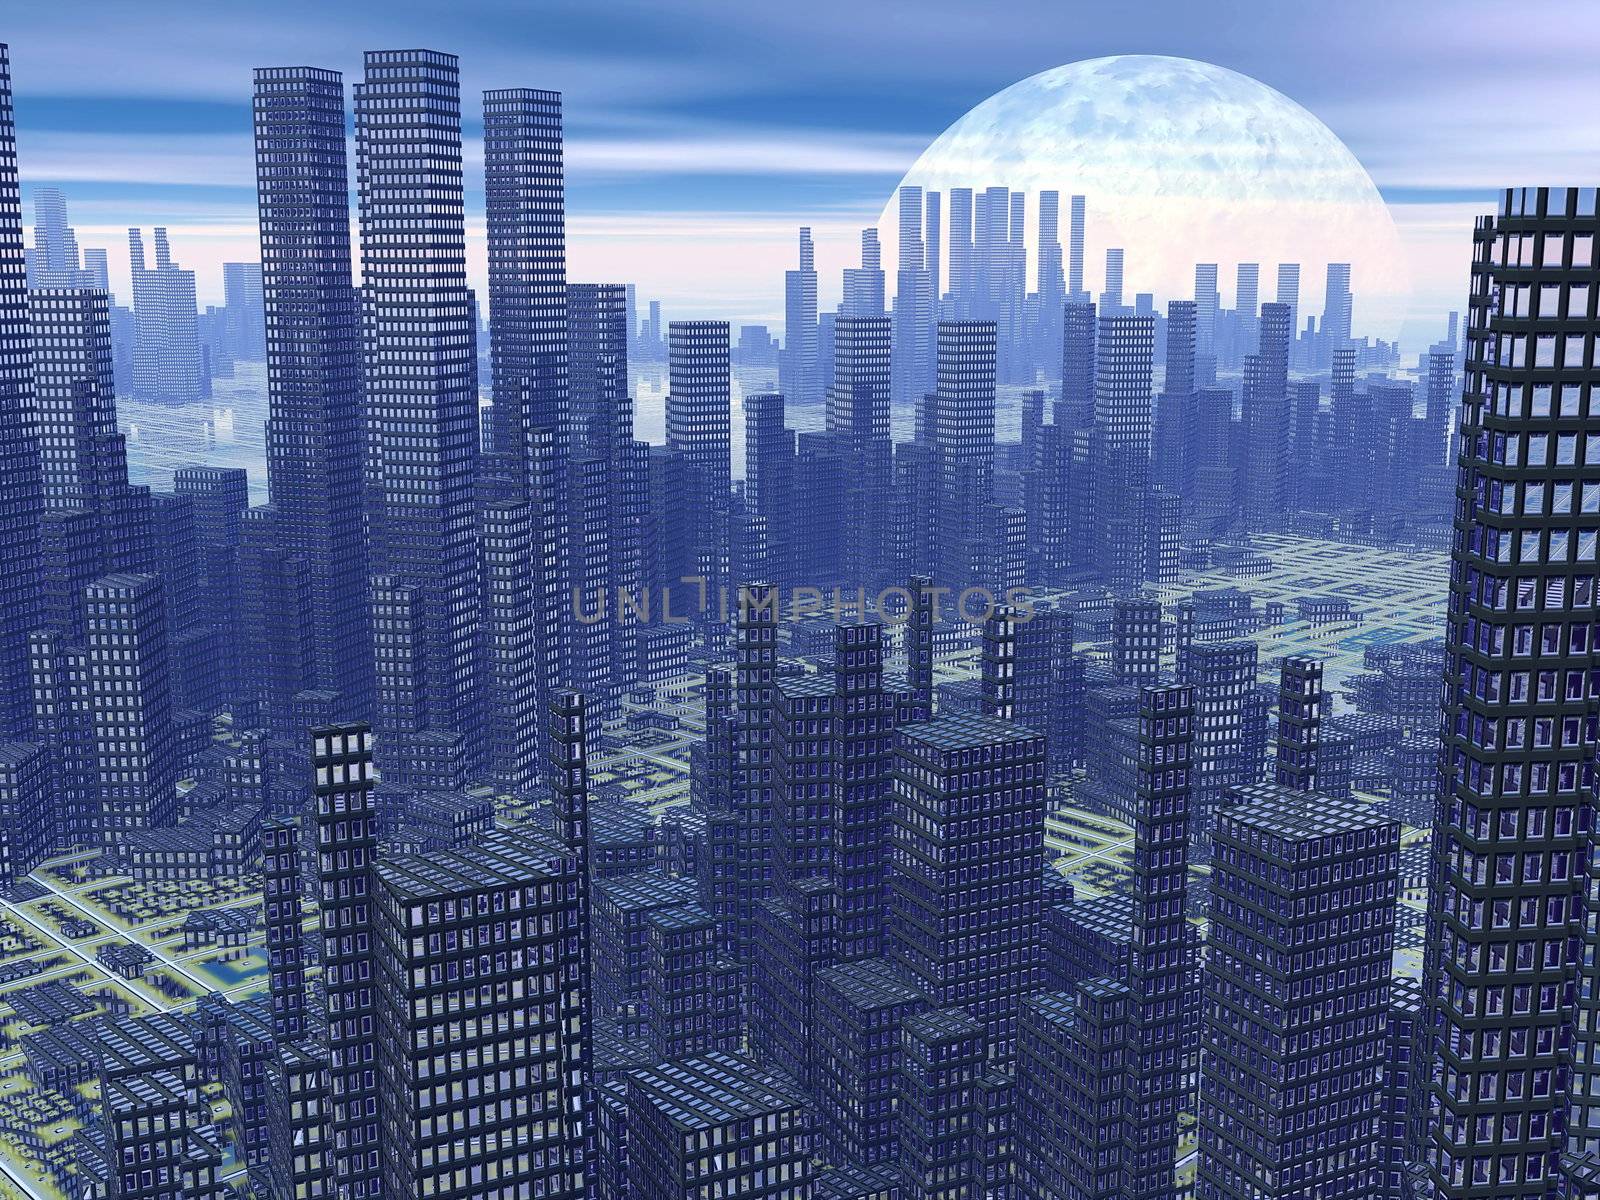 Futuristic city - 3D render by Elenaphotos21